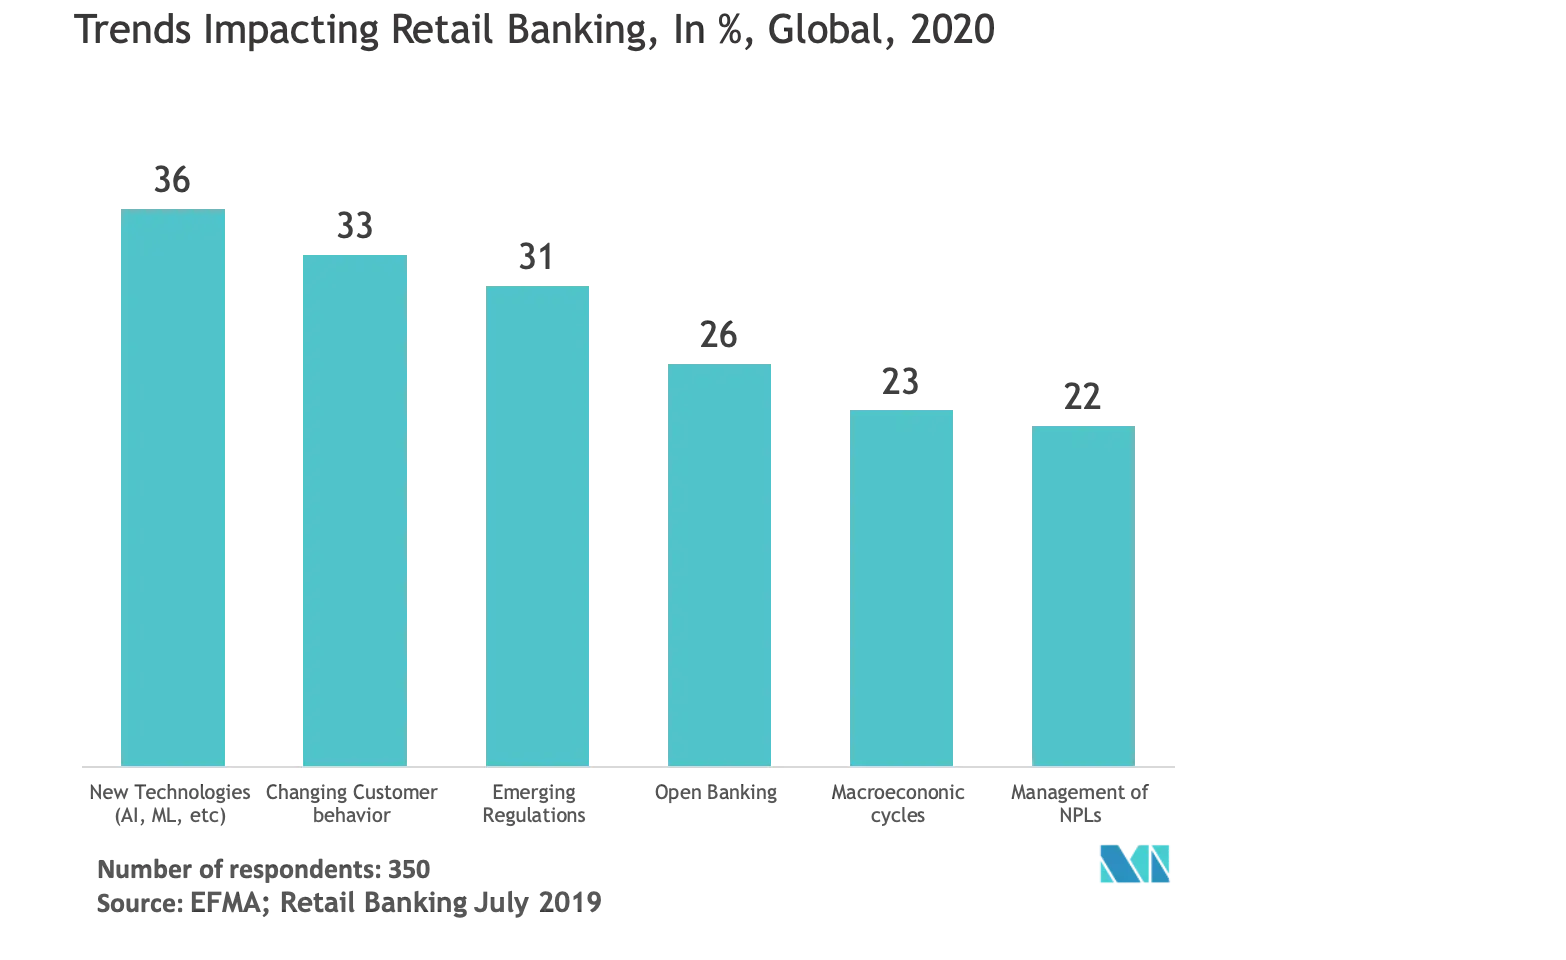 Trends Impacting Retail Banking, In %, Global, 2020 